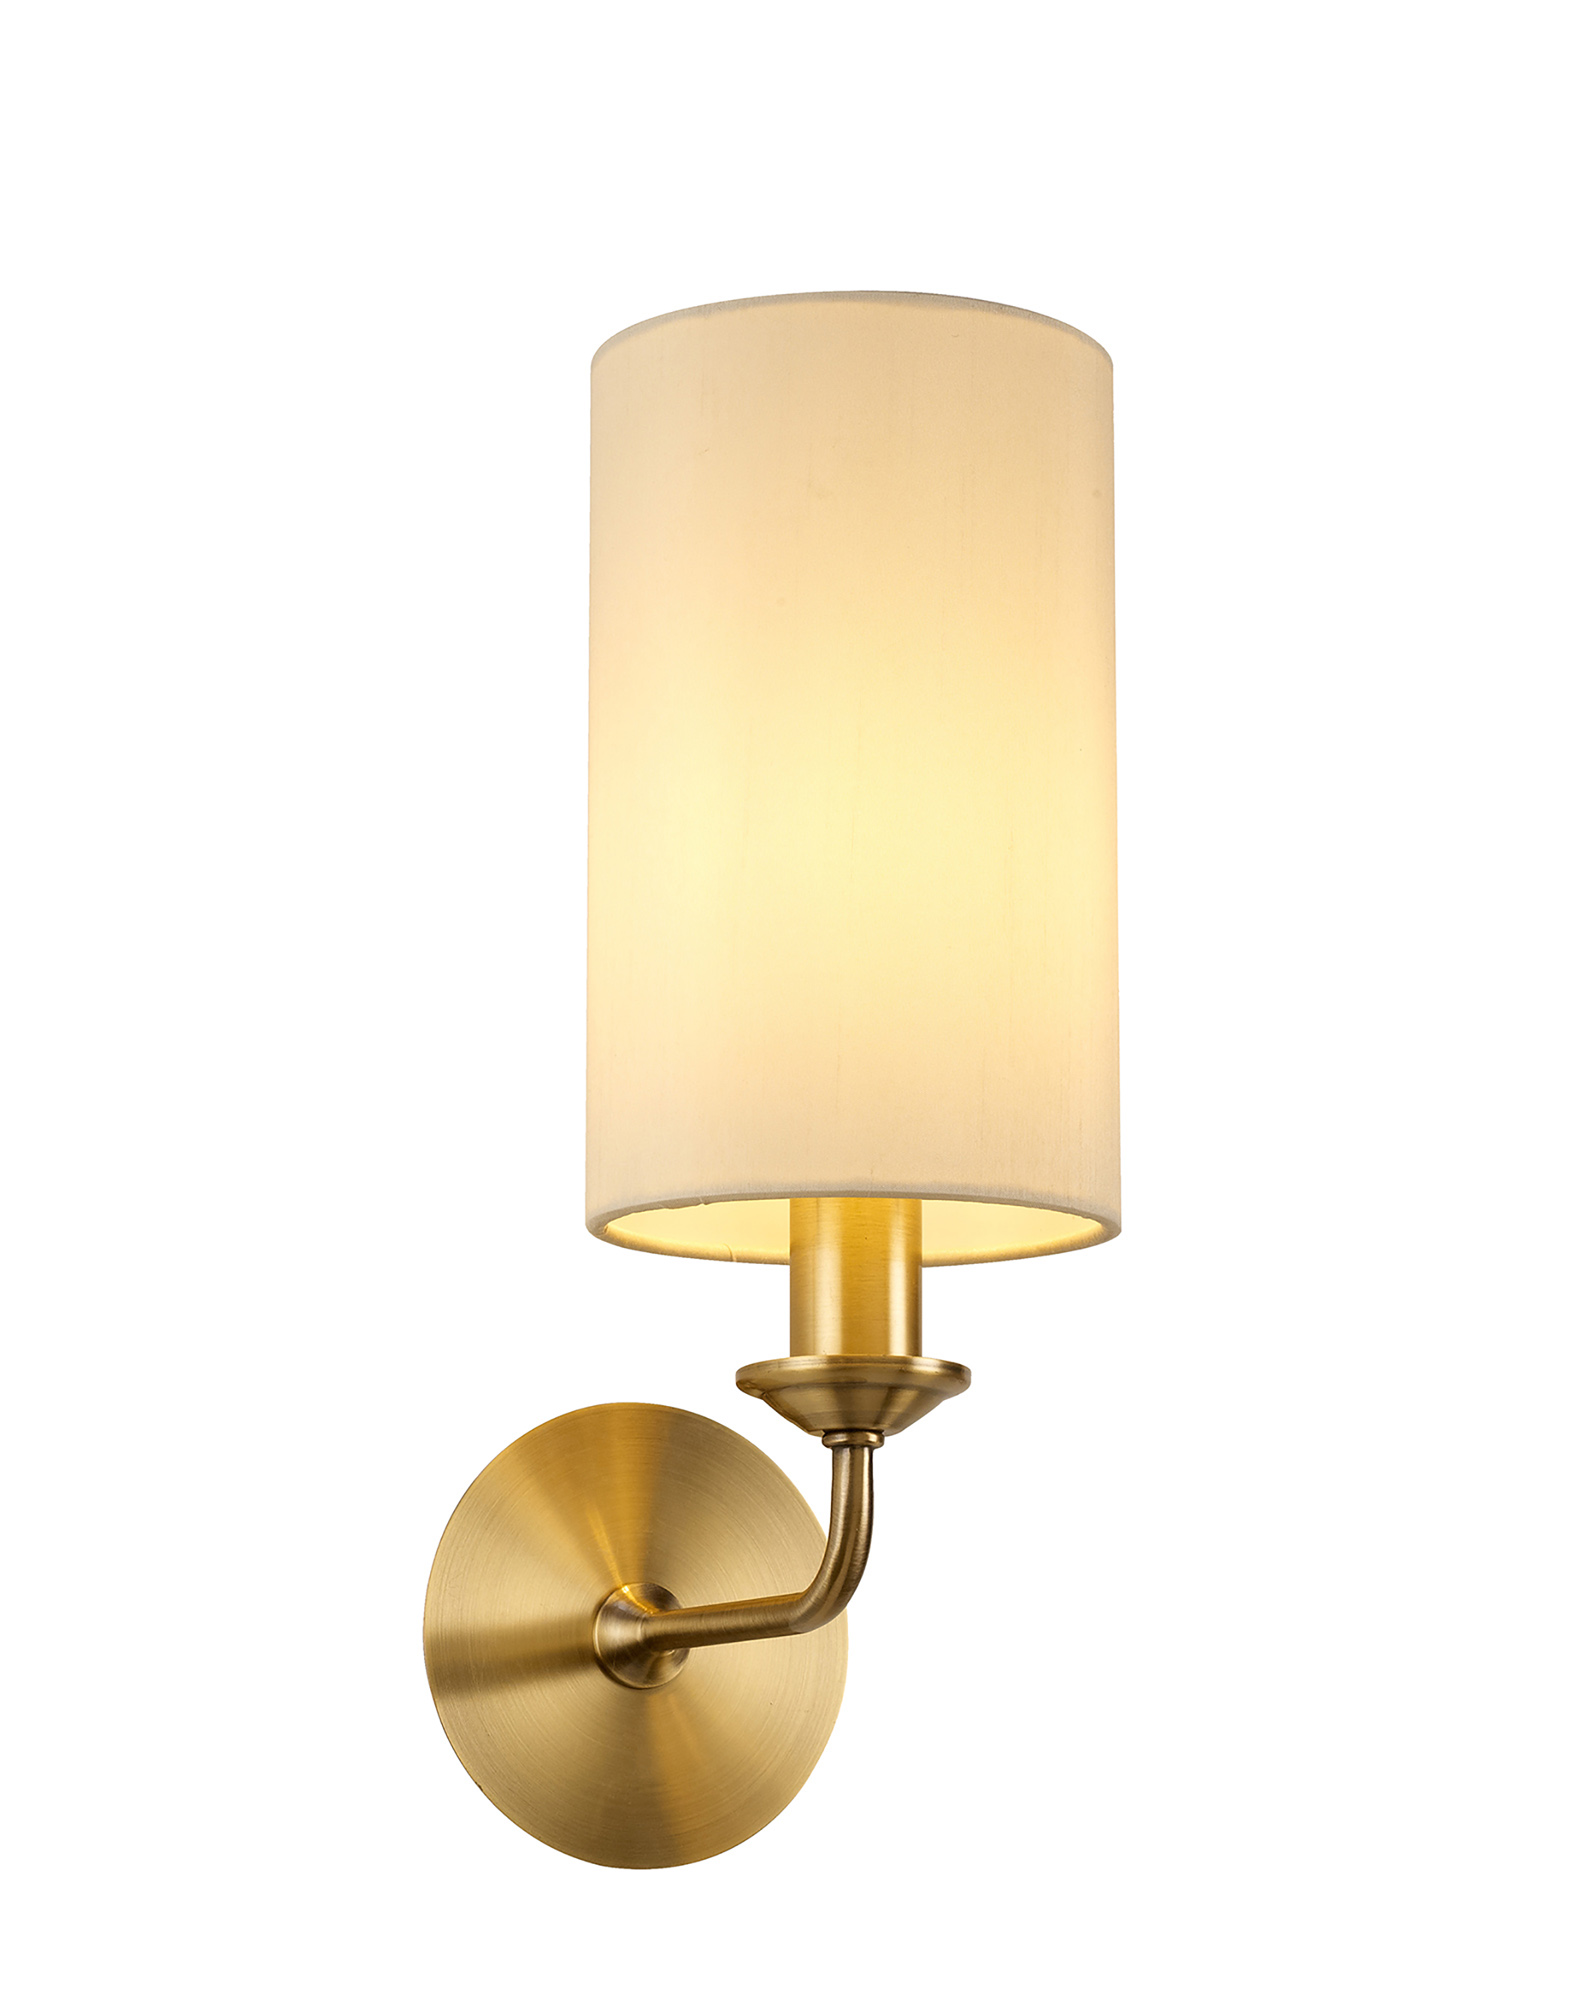 DK0038  Banyan Wall Lamp 1 Light Antique Brass; Ivory Pearl